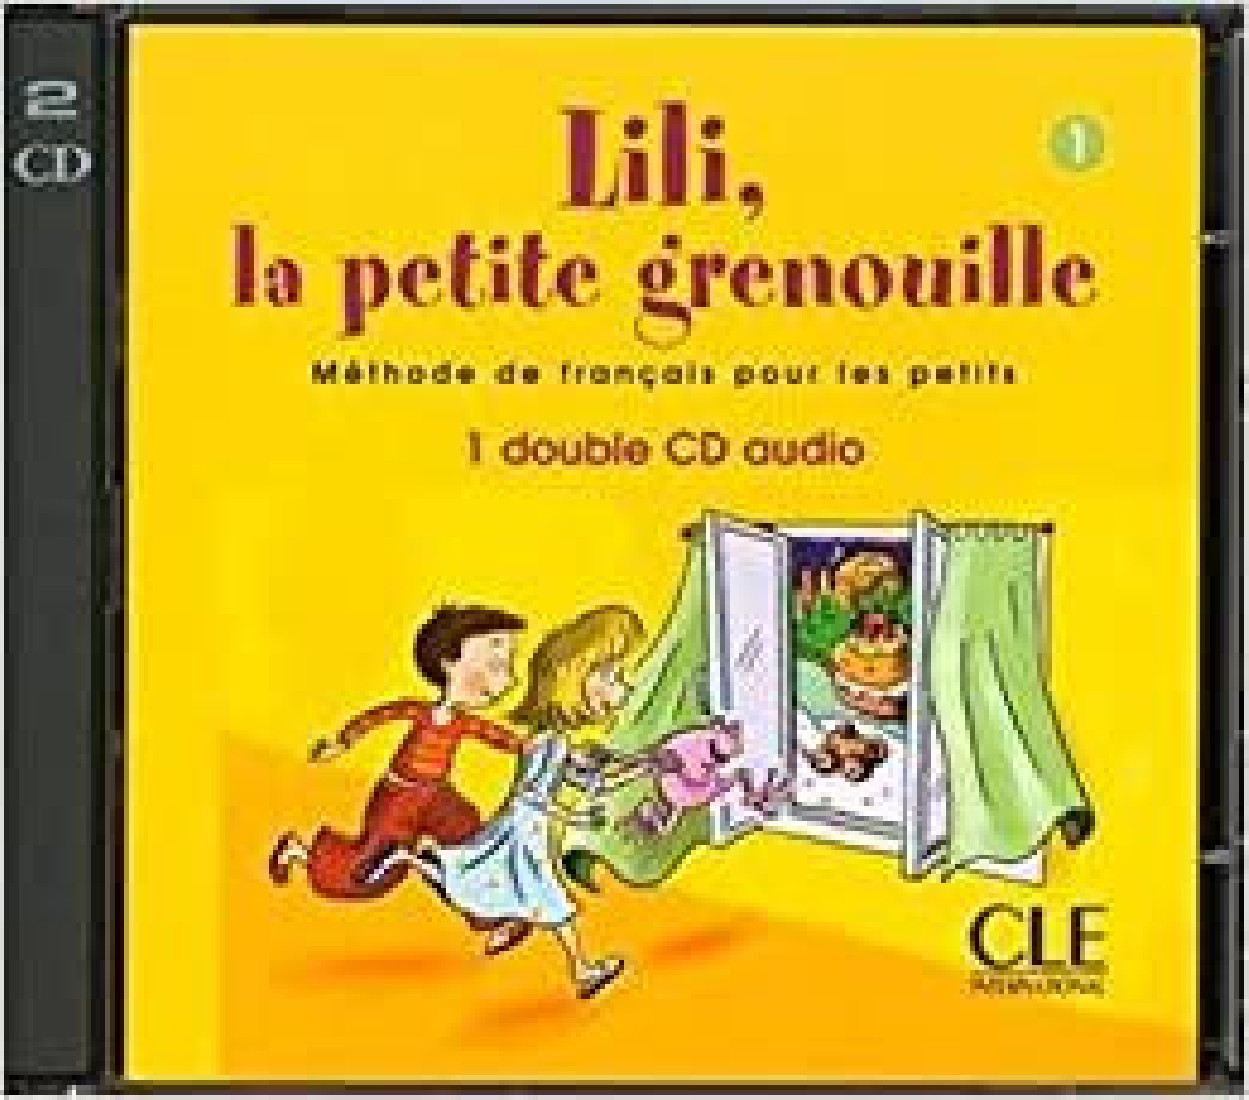 LILI LA PETIT GRENOUILLE 1 CD AUDIO CLASS